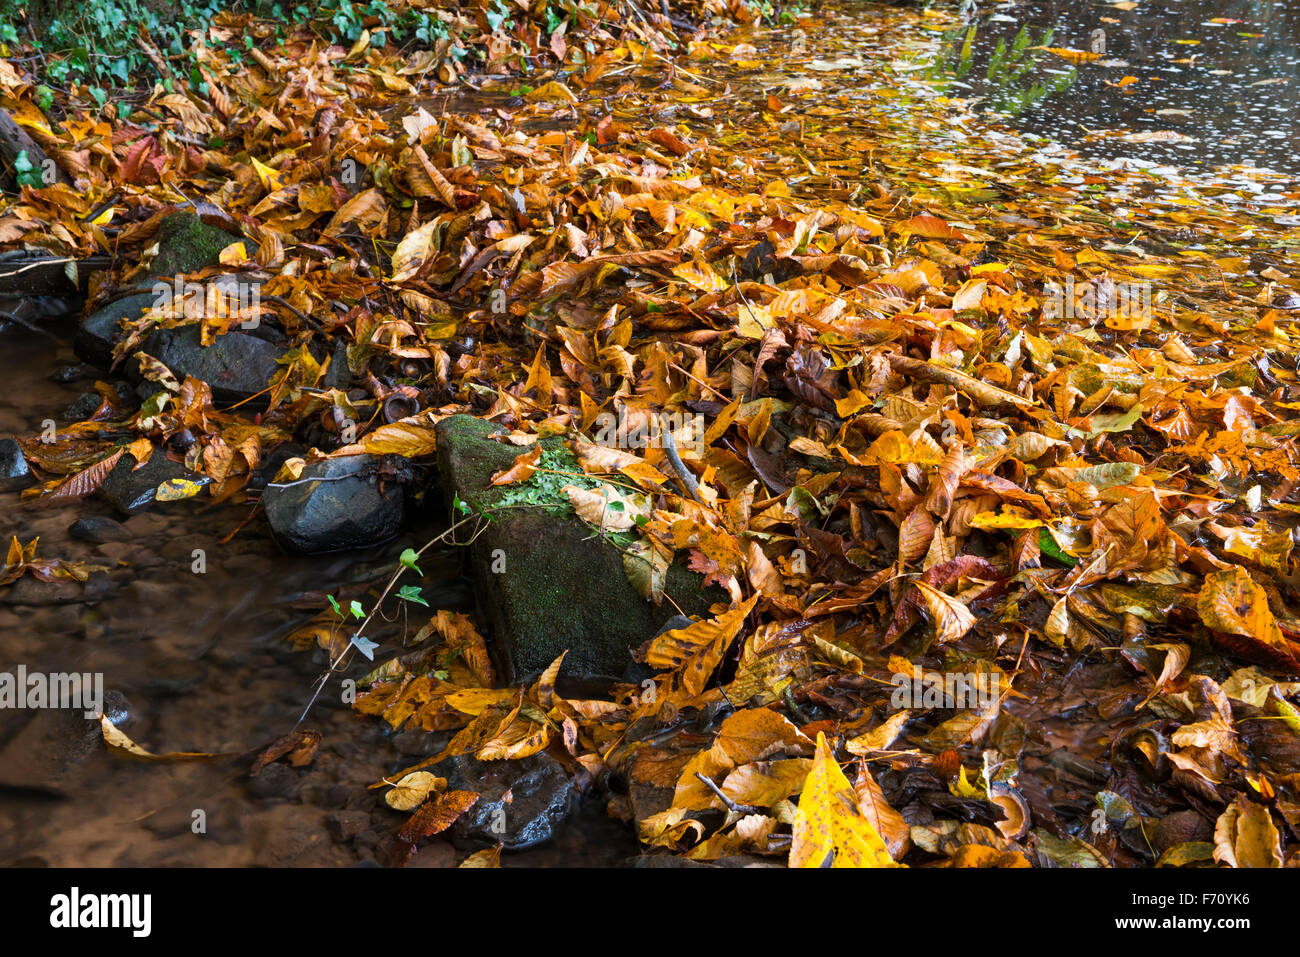 Fallen leaves blocking a stream in a Shropshire garden, England. Stock Photo